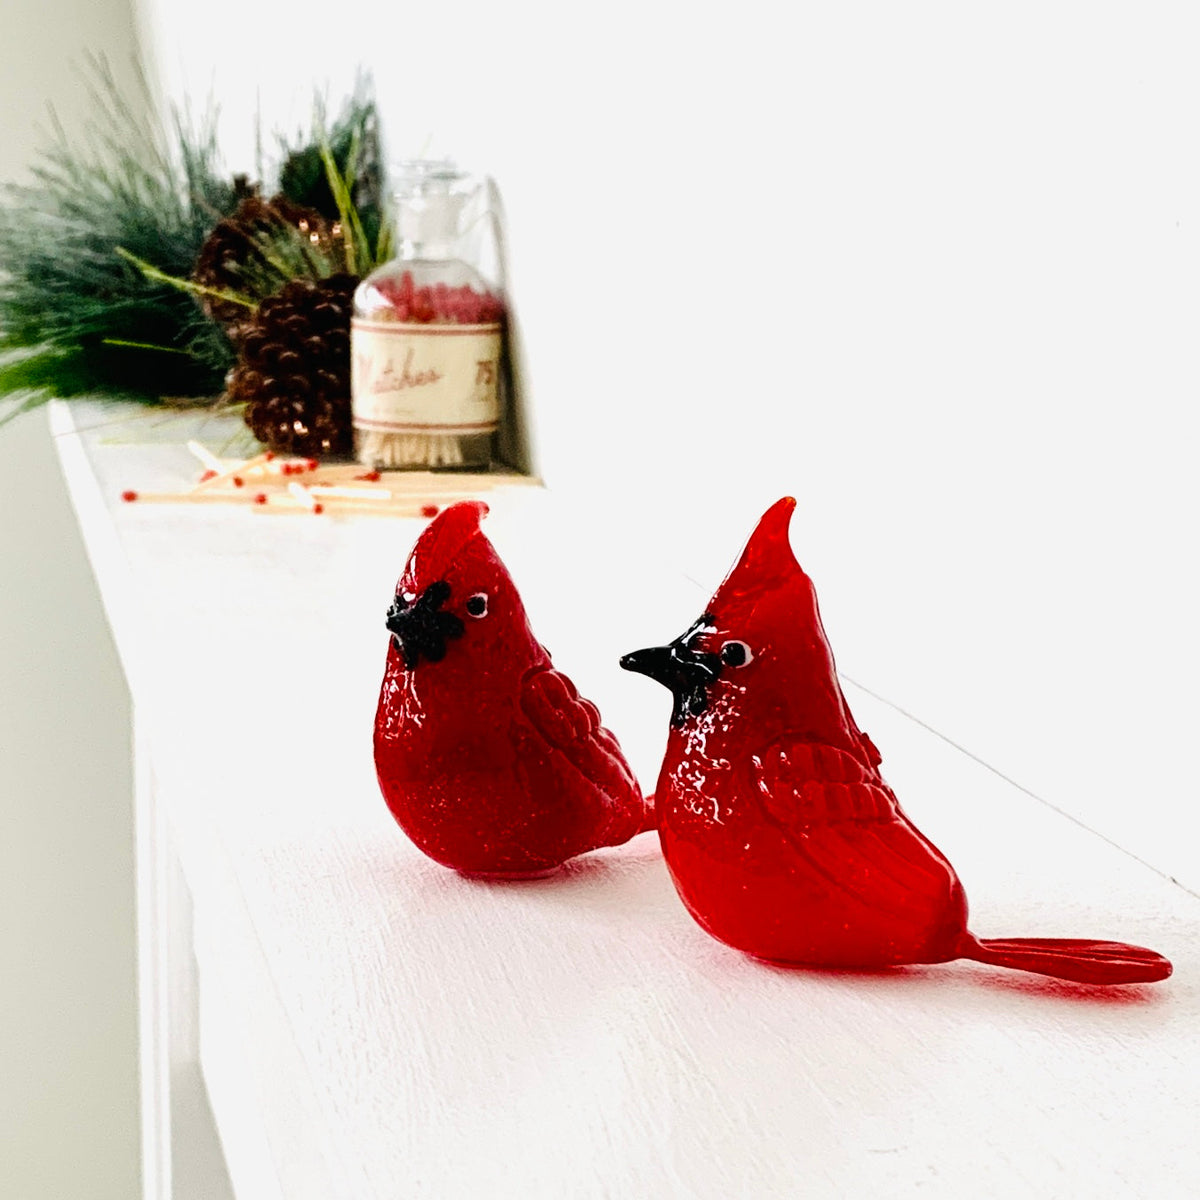 Glass Salt and Pepper Shakers, Cardinals Gift Essentials 